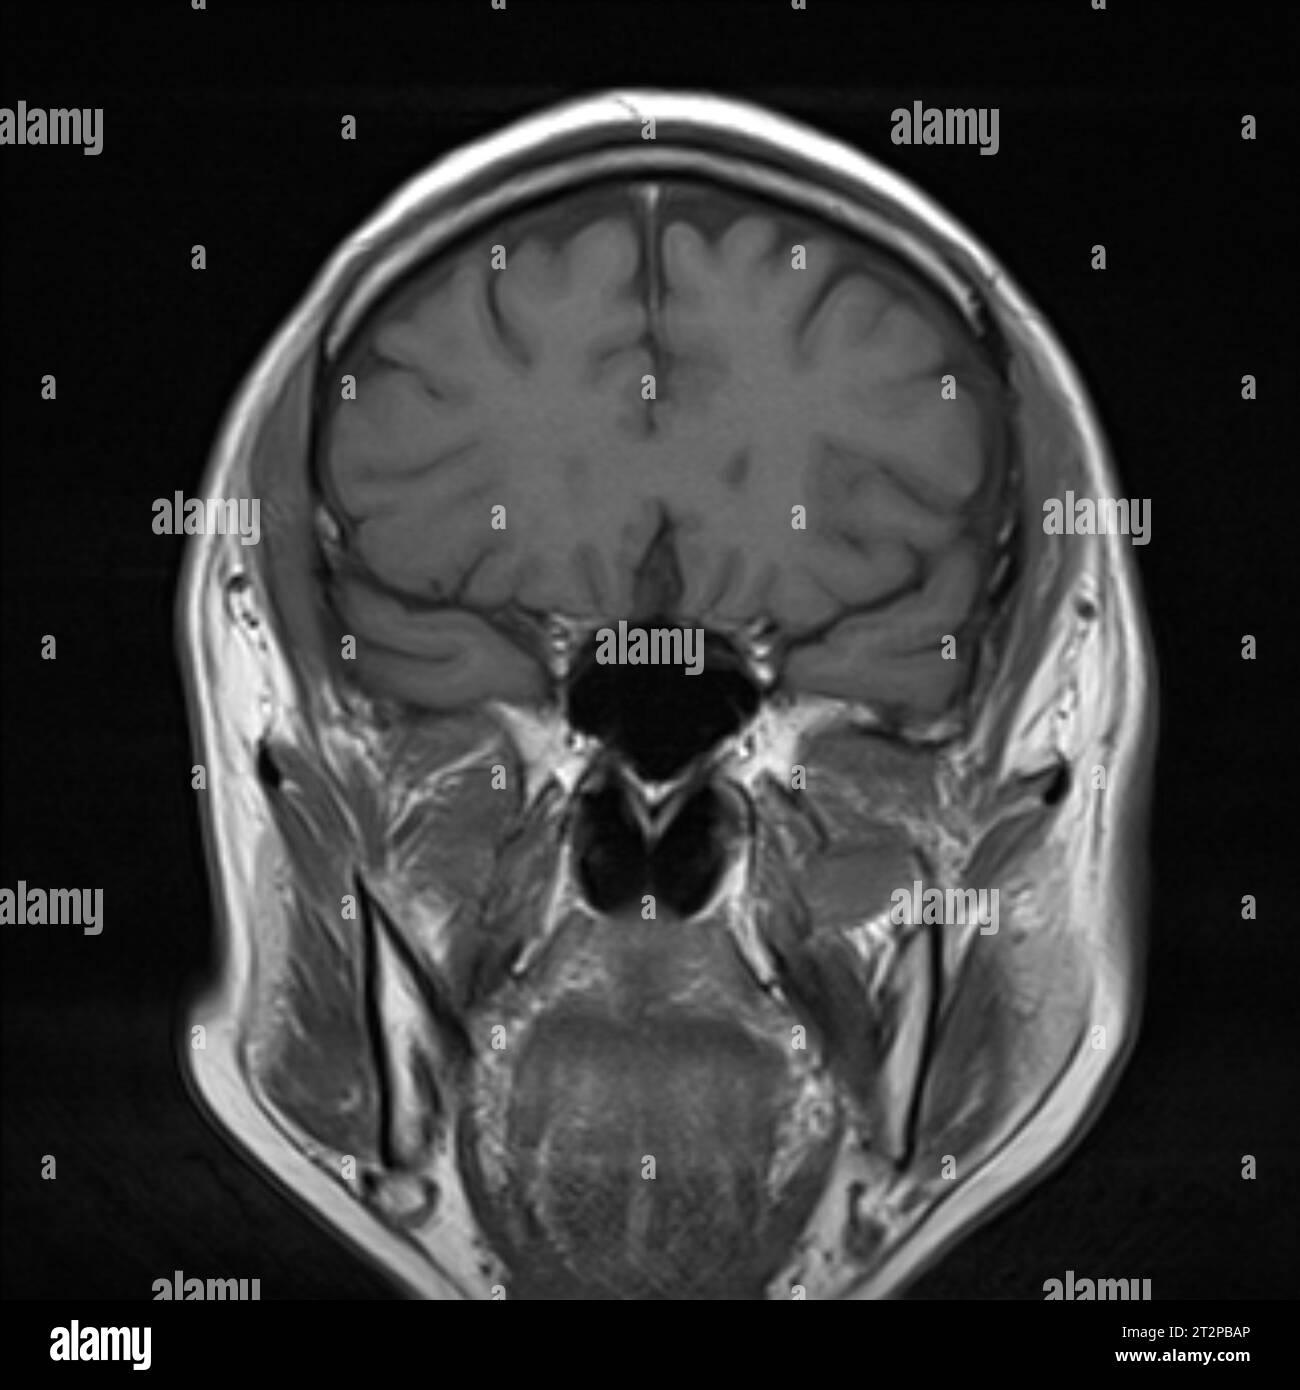 Healthy brain, MRI scan Stock Photo - Alamy